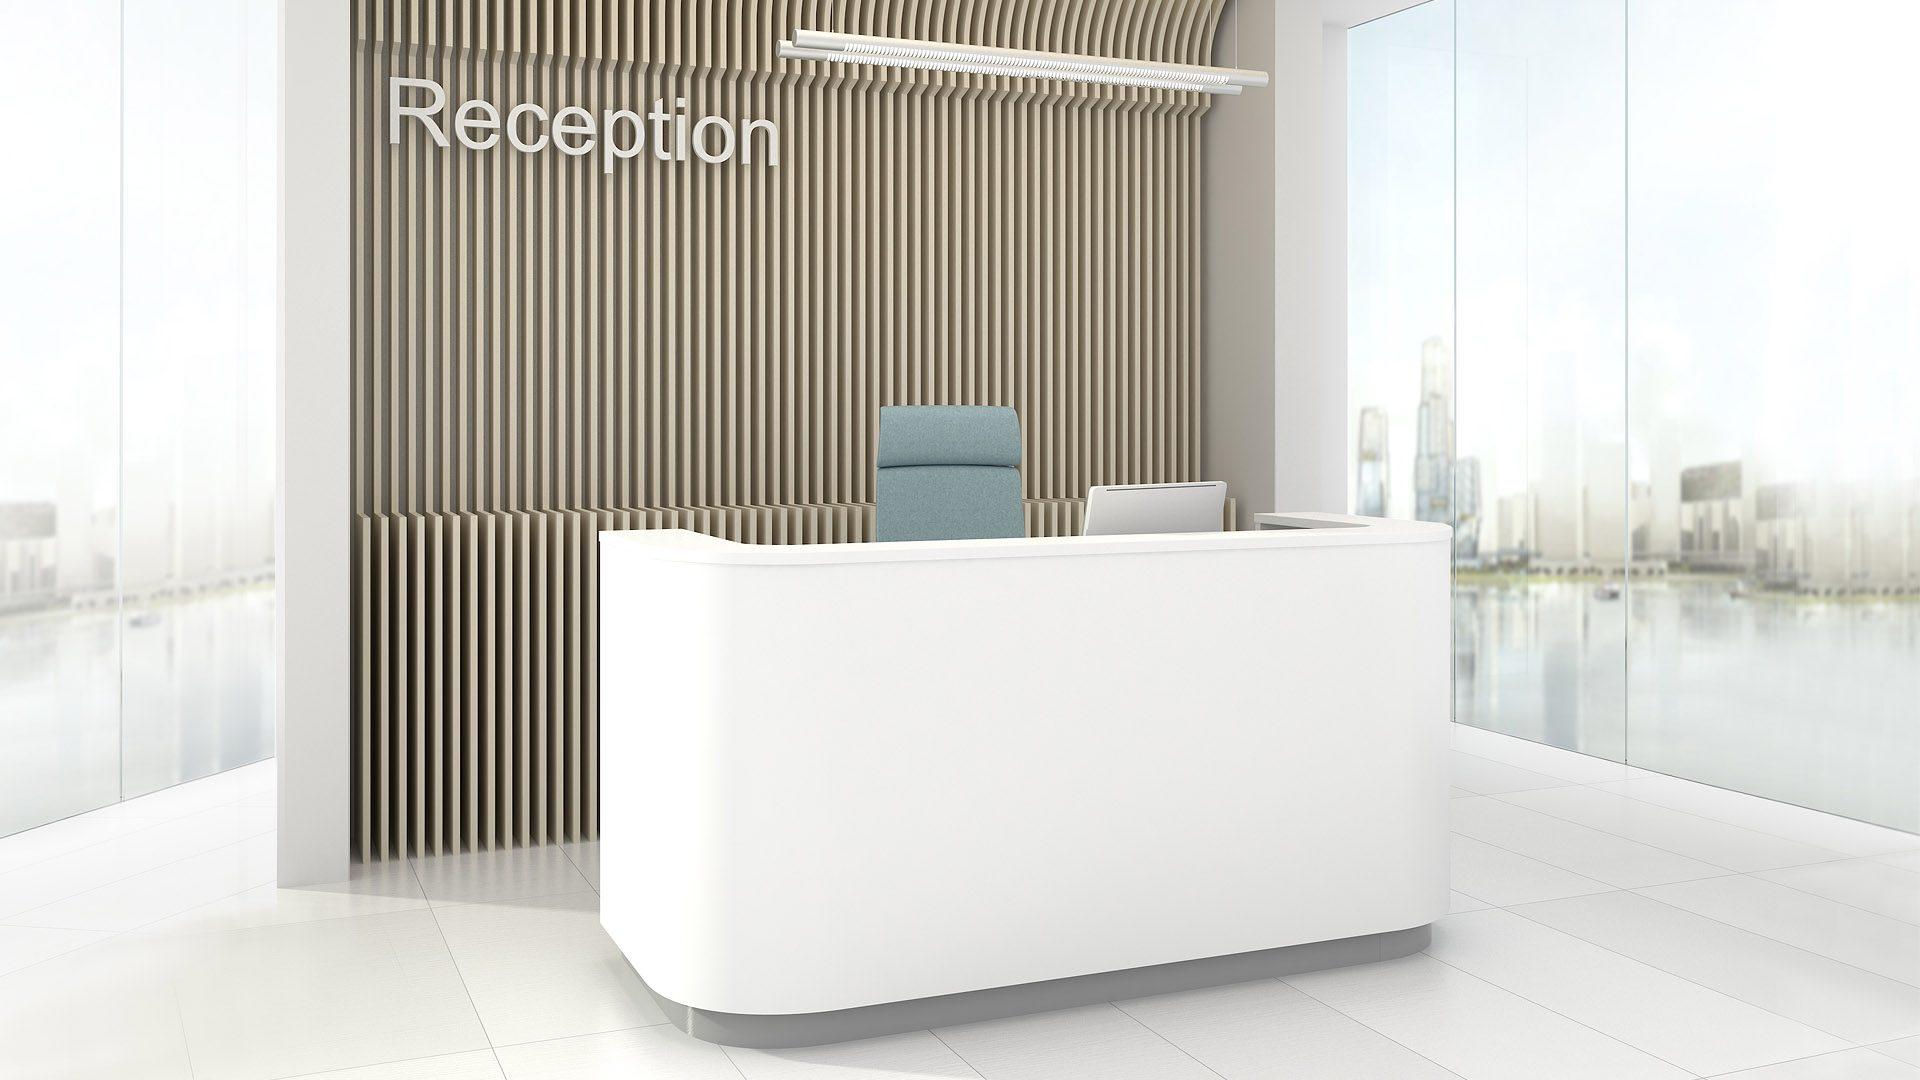 COSY one-size reception desk in white